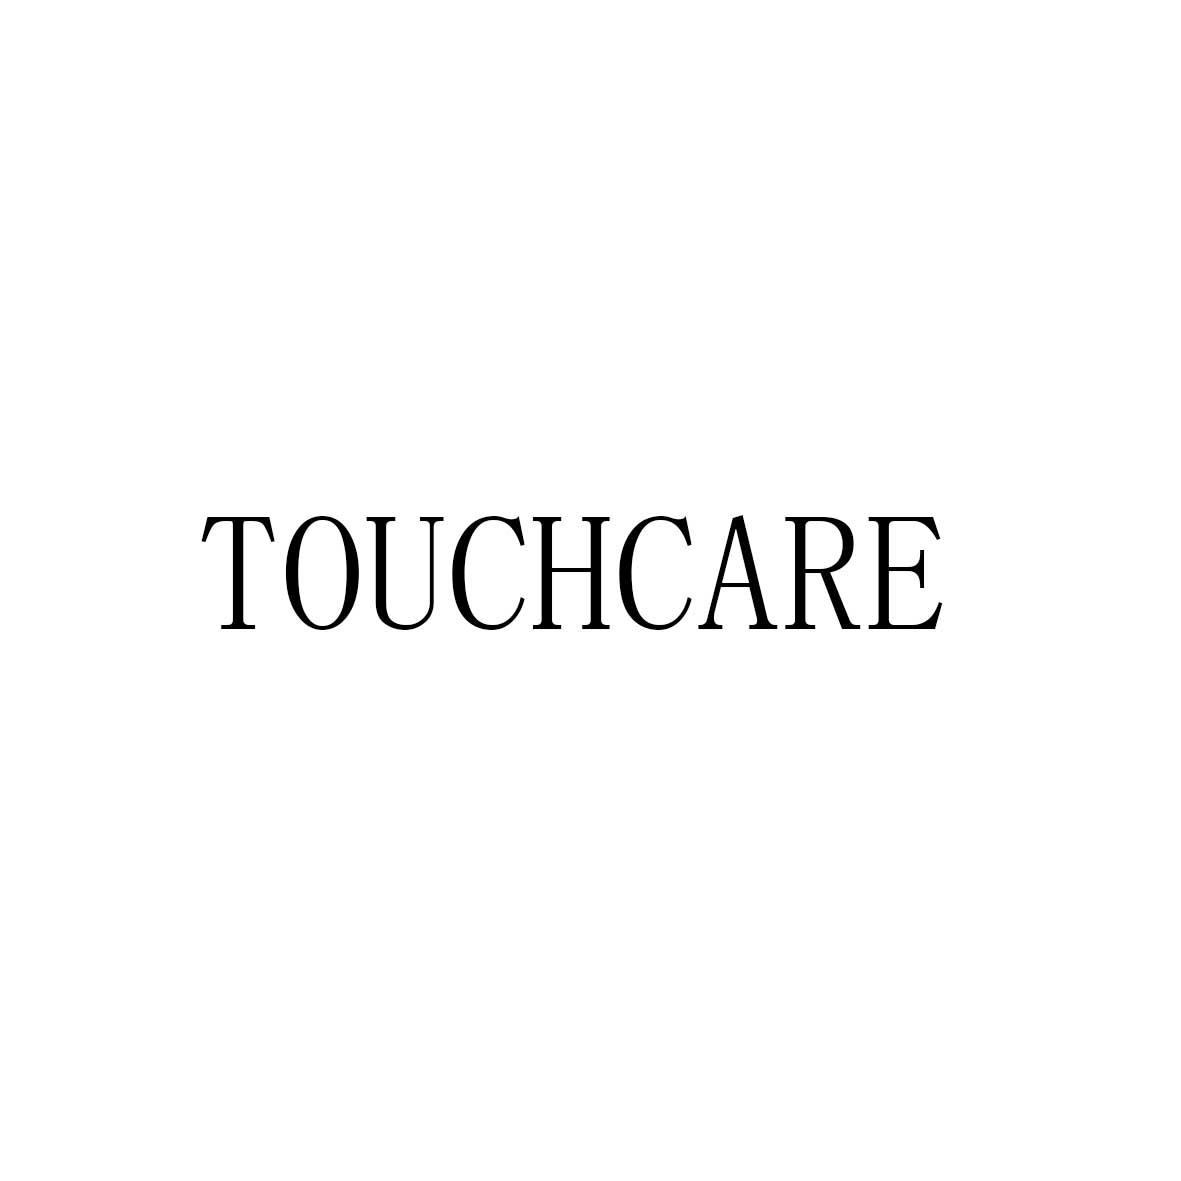 44类-医疗美容TOUCHCARE商标转让